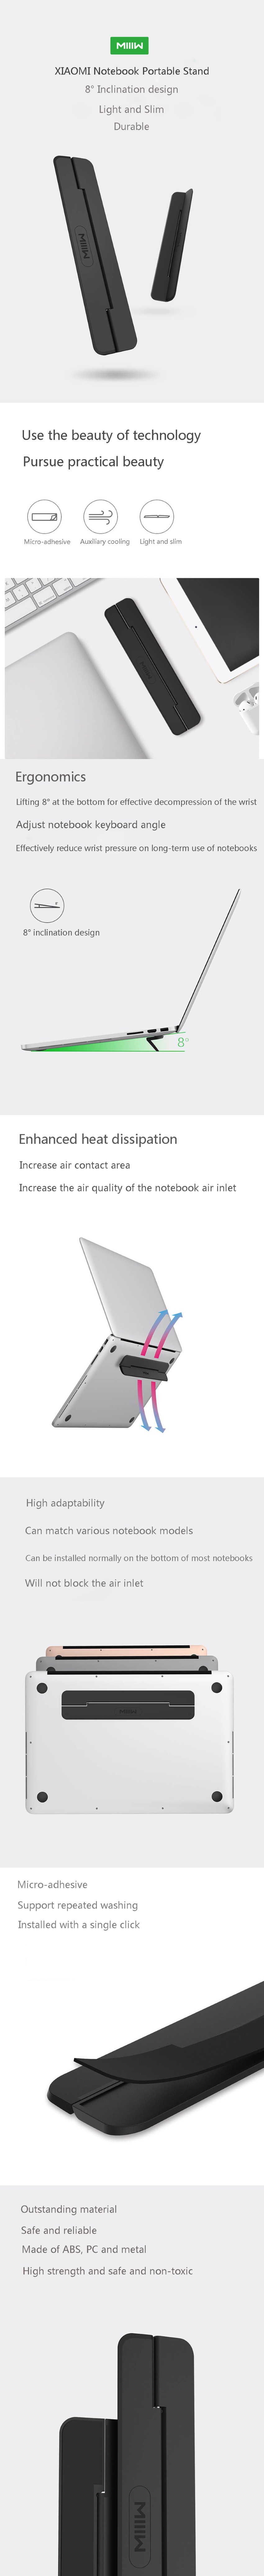 xiaomi miiiw ergonomic laptop notebook cooling stand